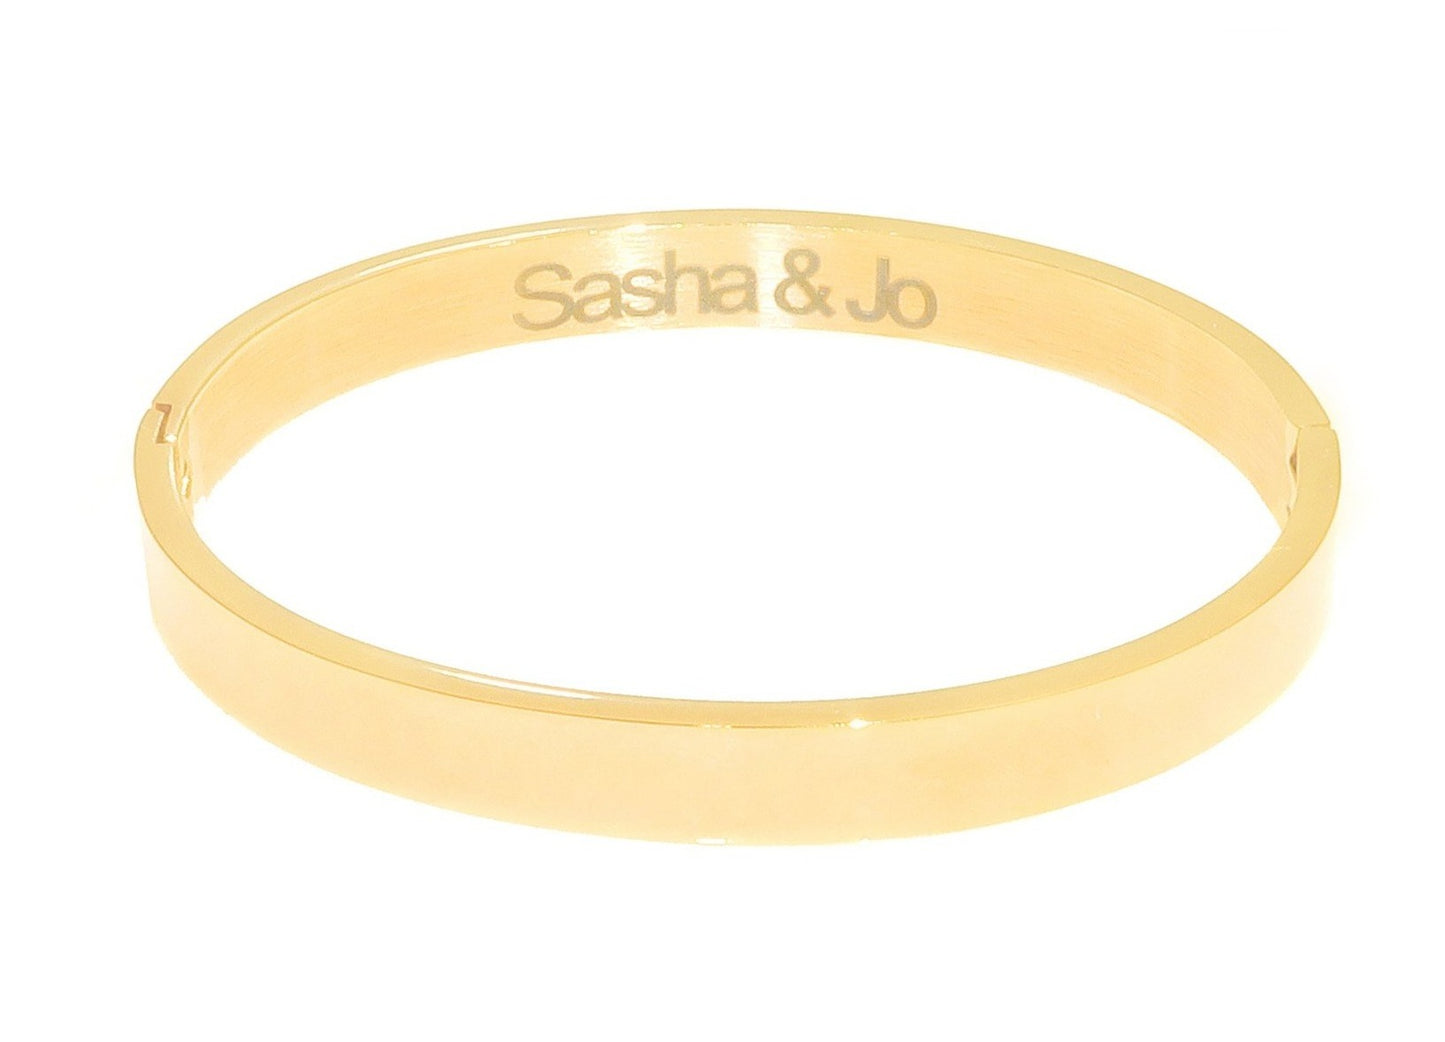 Sasha & Jo gold stainless steel bangle